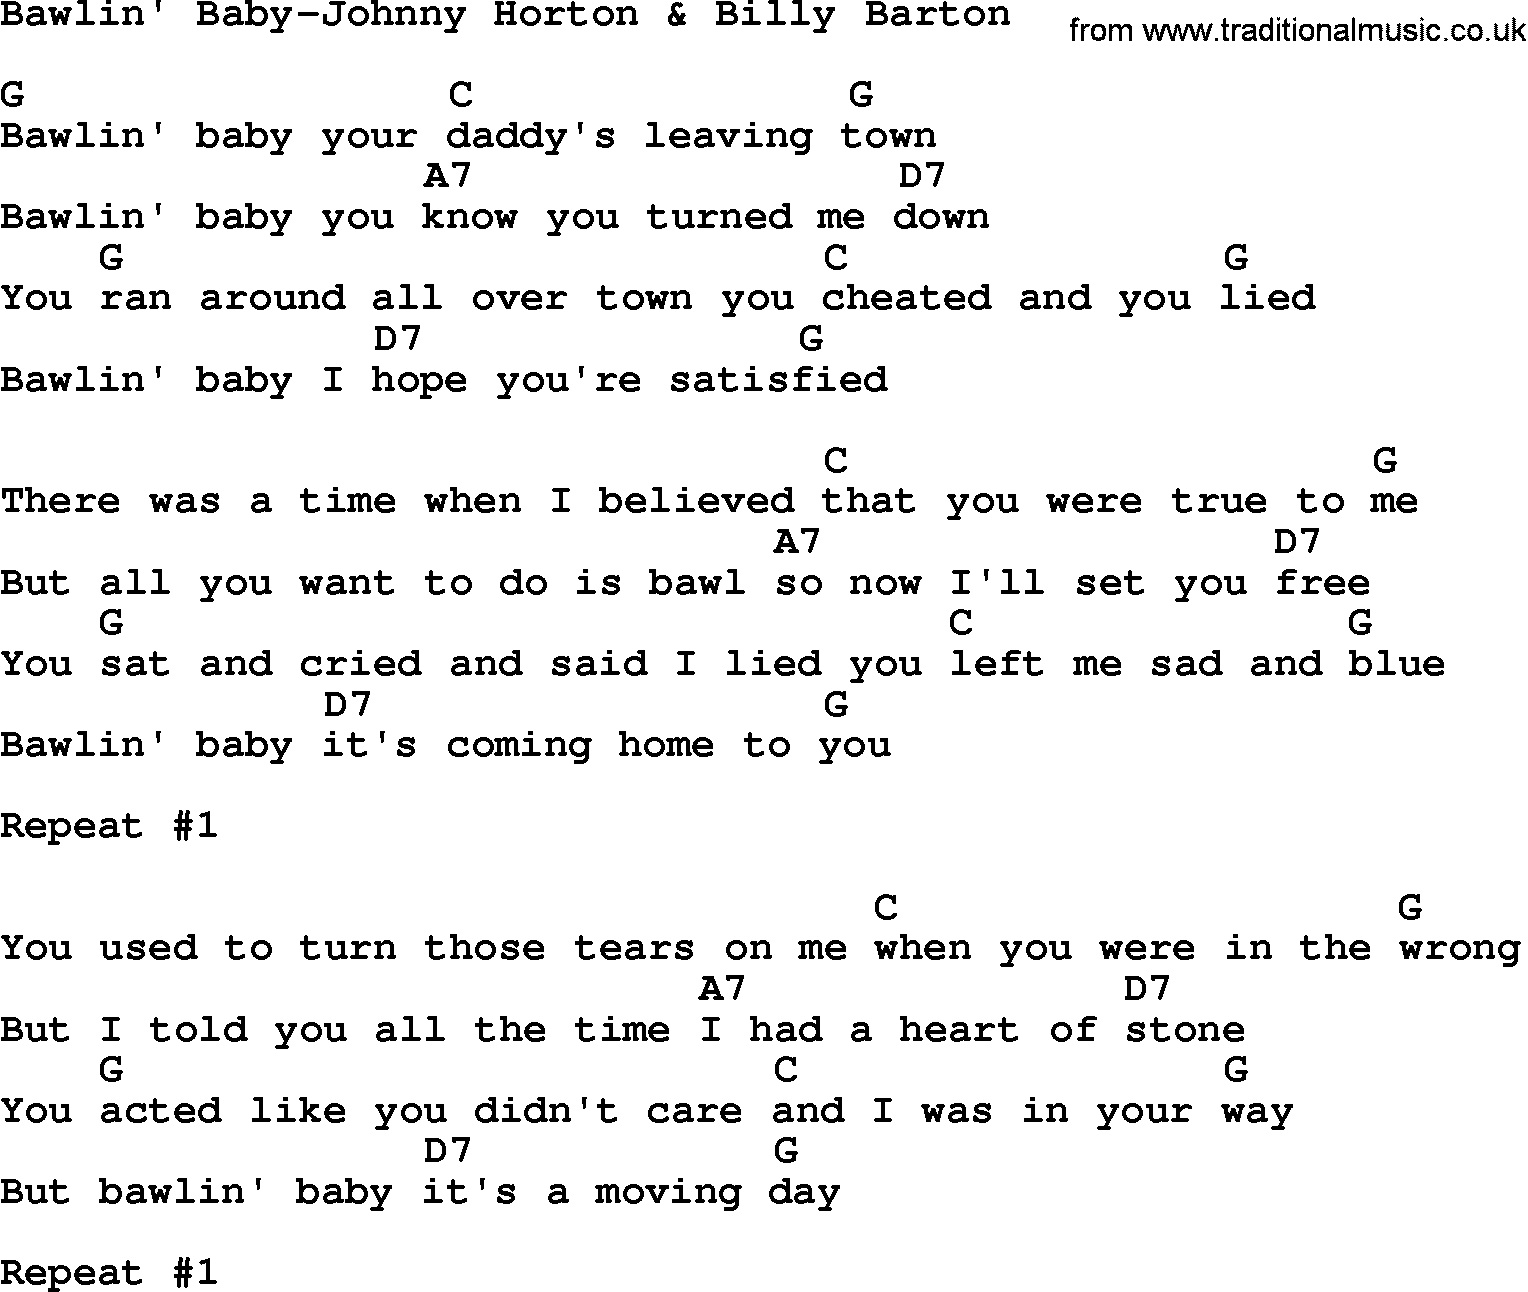 Country music song: Bawlin' Baby-Johnny Horton & Billy Barton lyrics and chords